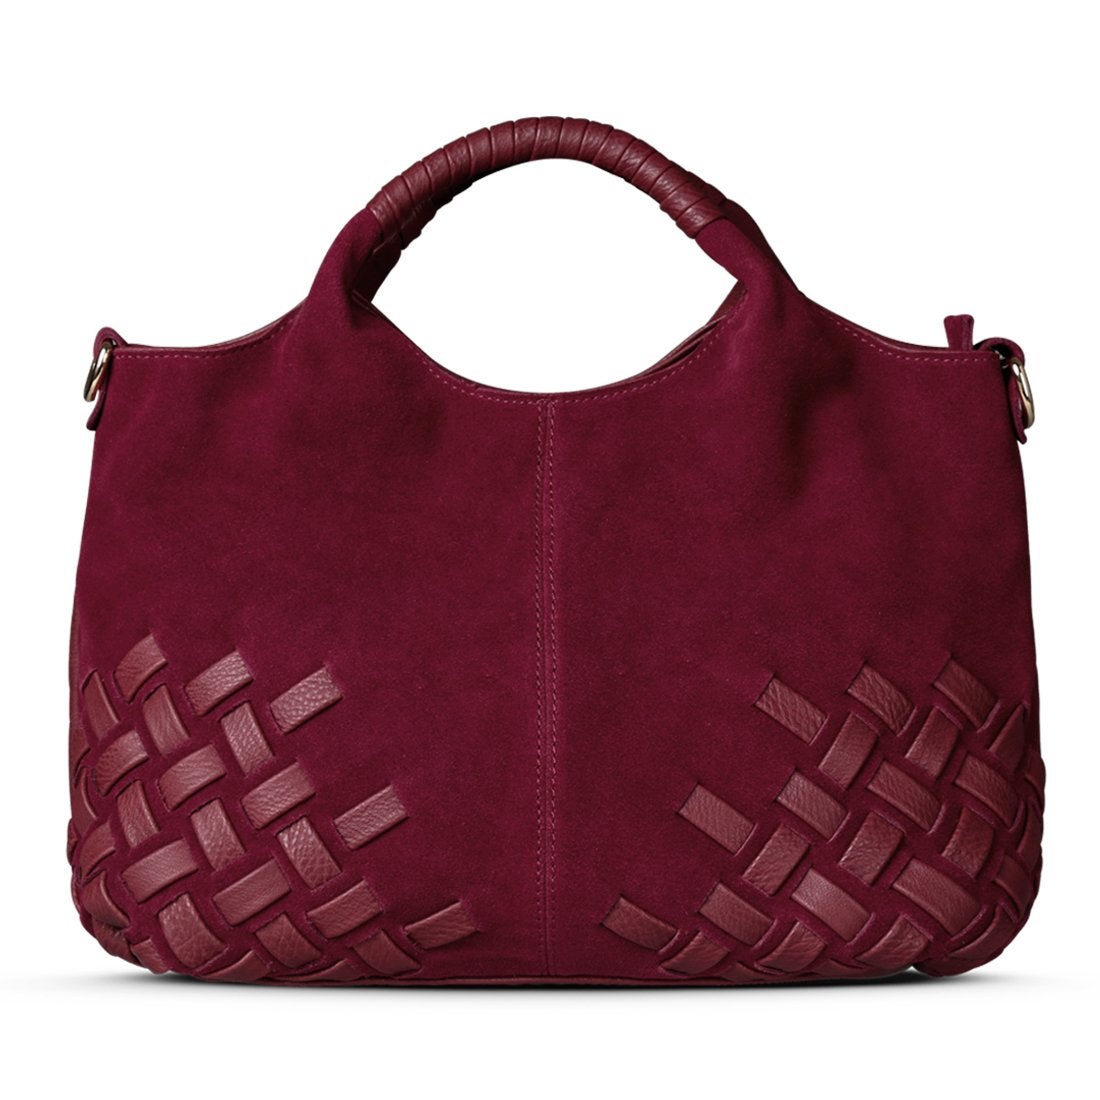 Nico Louise + Genuine Leather Weave Handbag